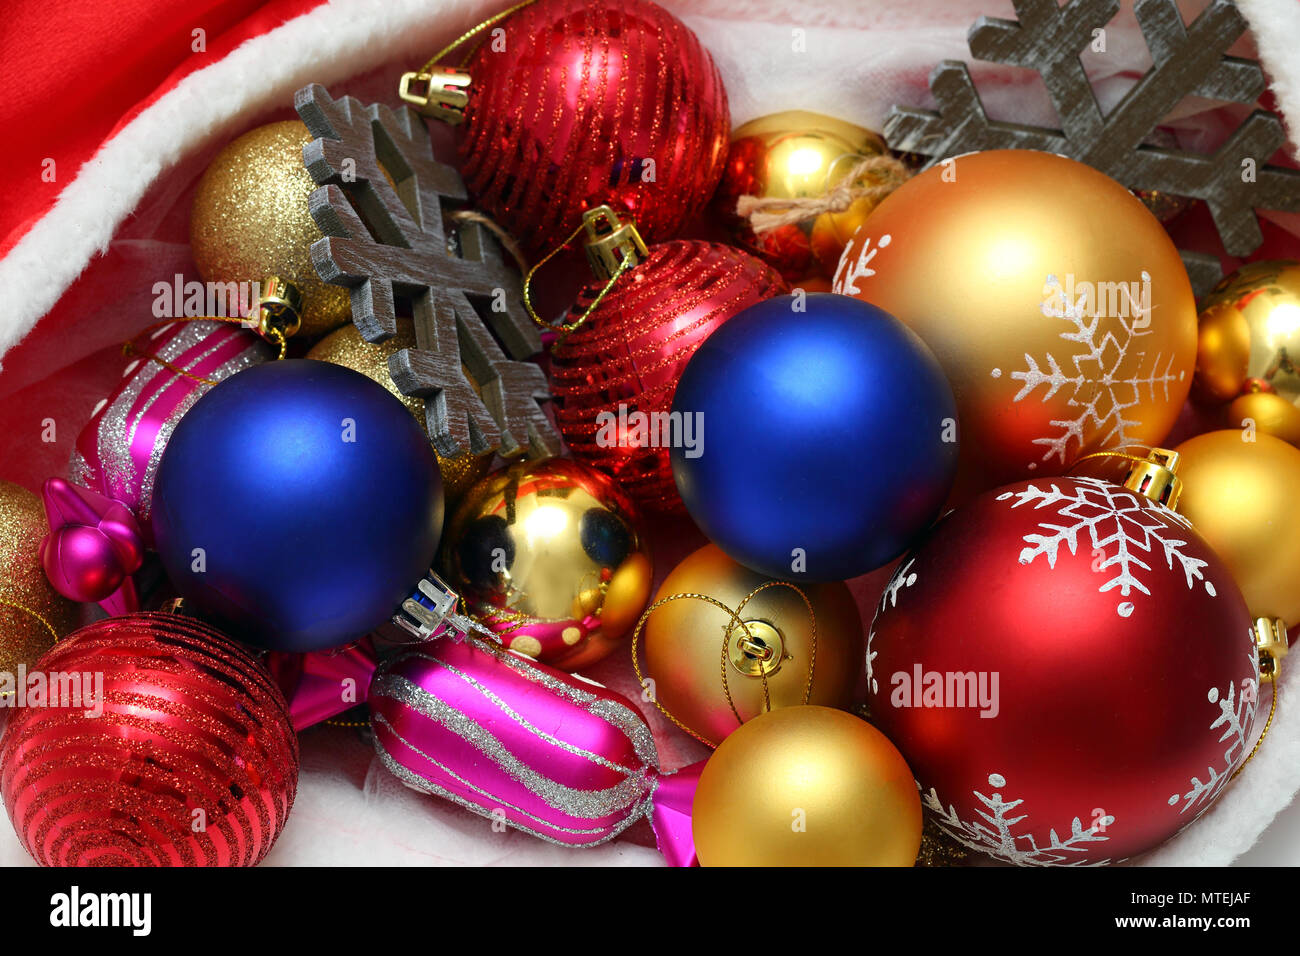 Christmas balls, toys in bag Stock Photo